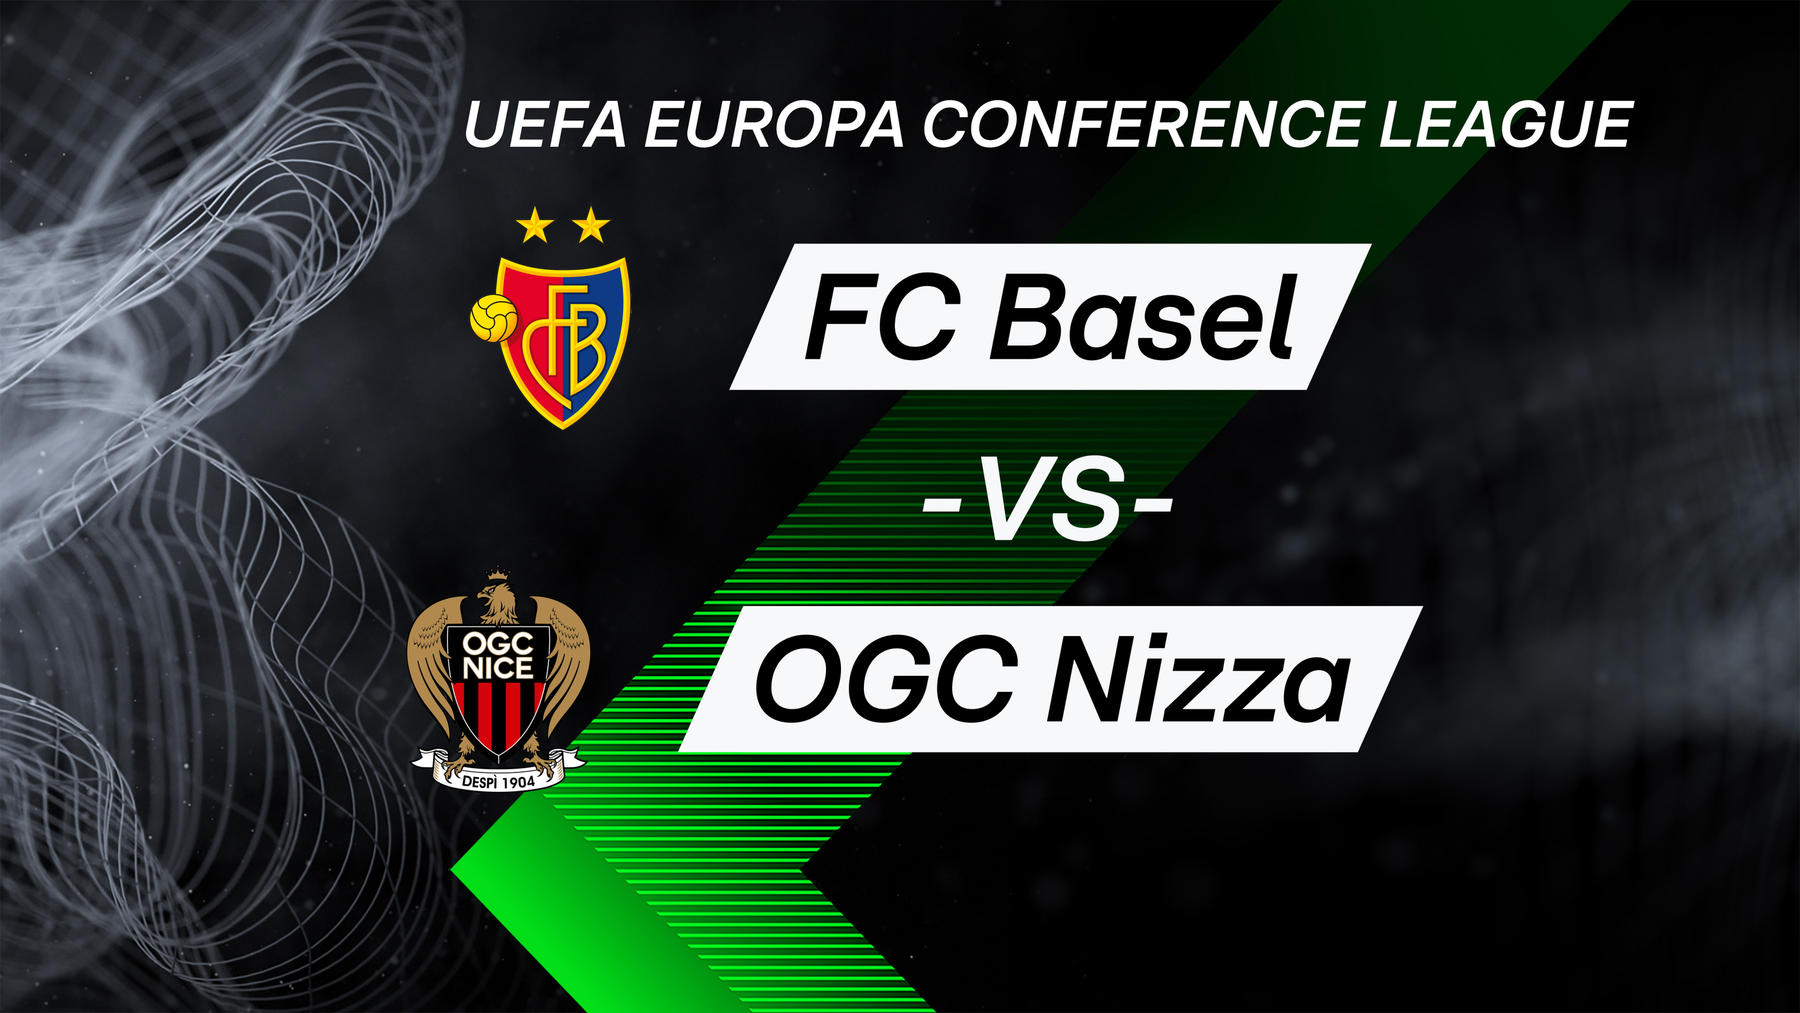 FC Basel vs. OGC Nizza